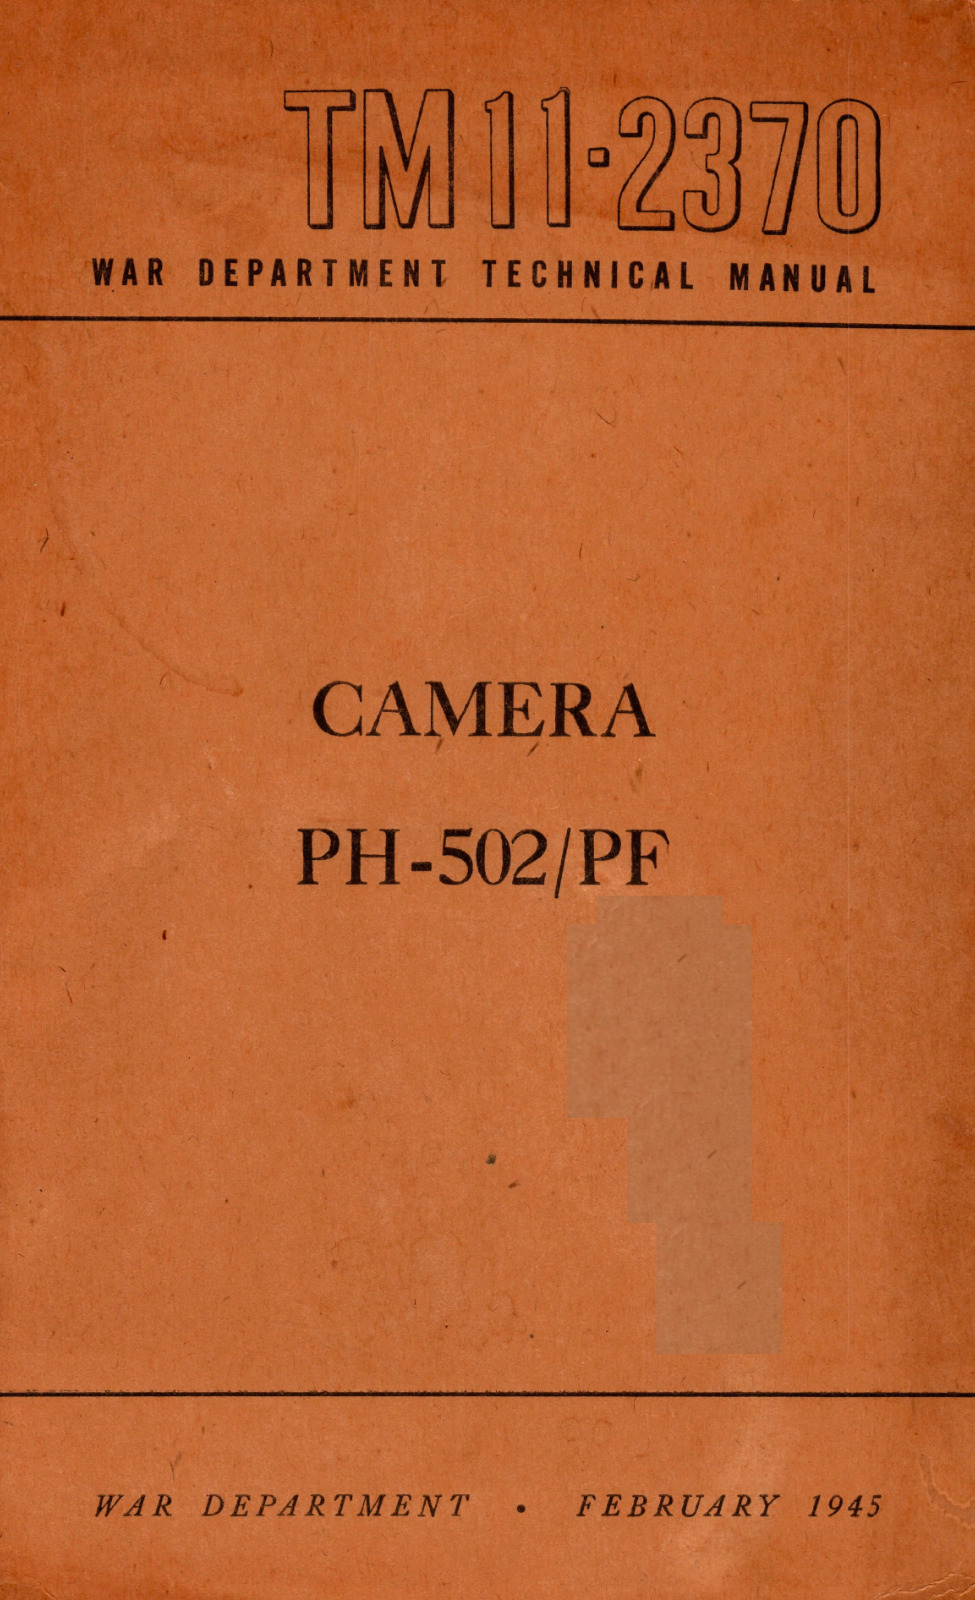 32 Page February 1945 TM 11-2370 CAMERA PH-502/PF Kodak Bantam Manual on Data CD